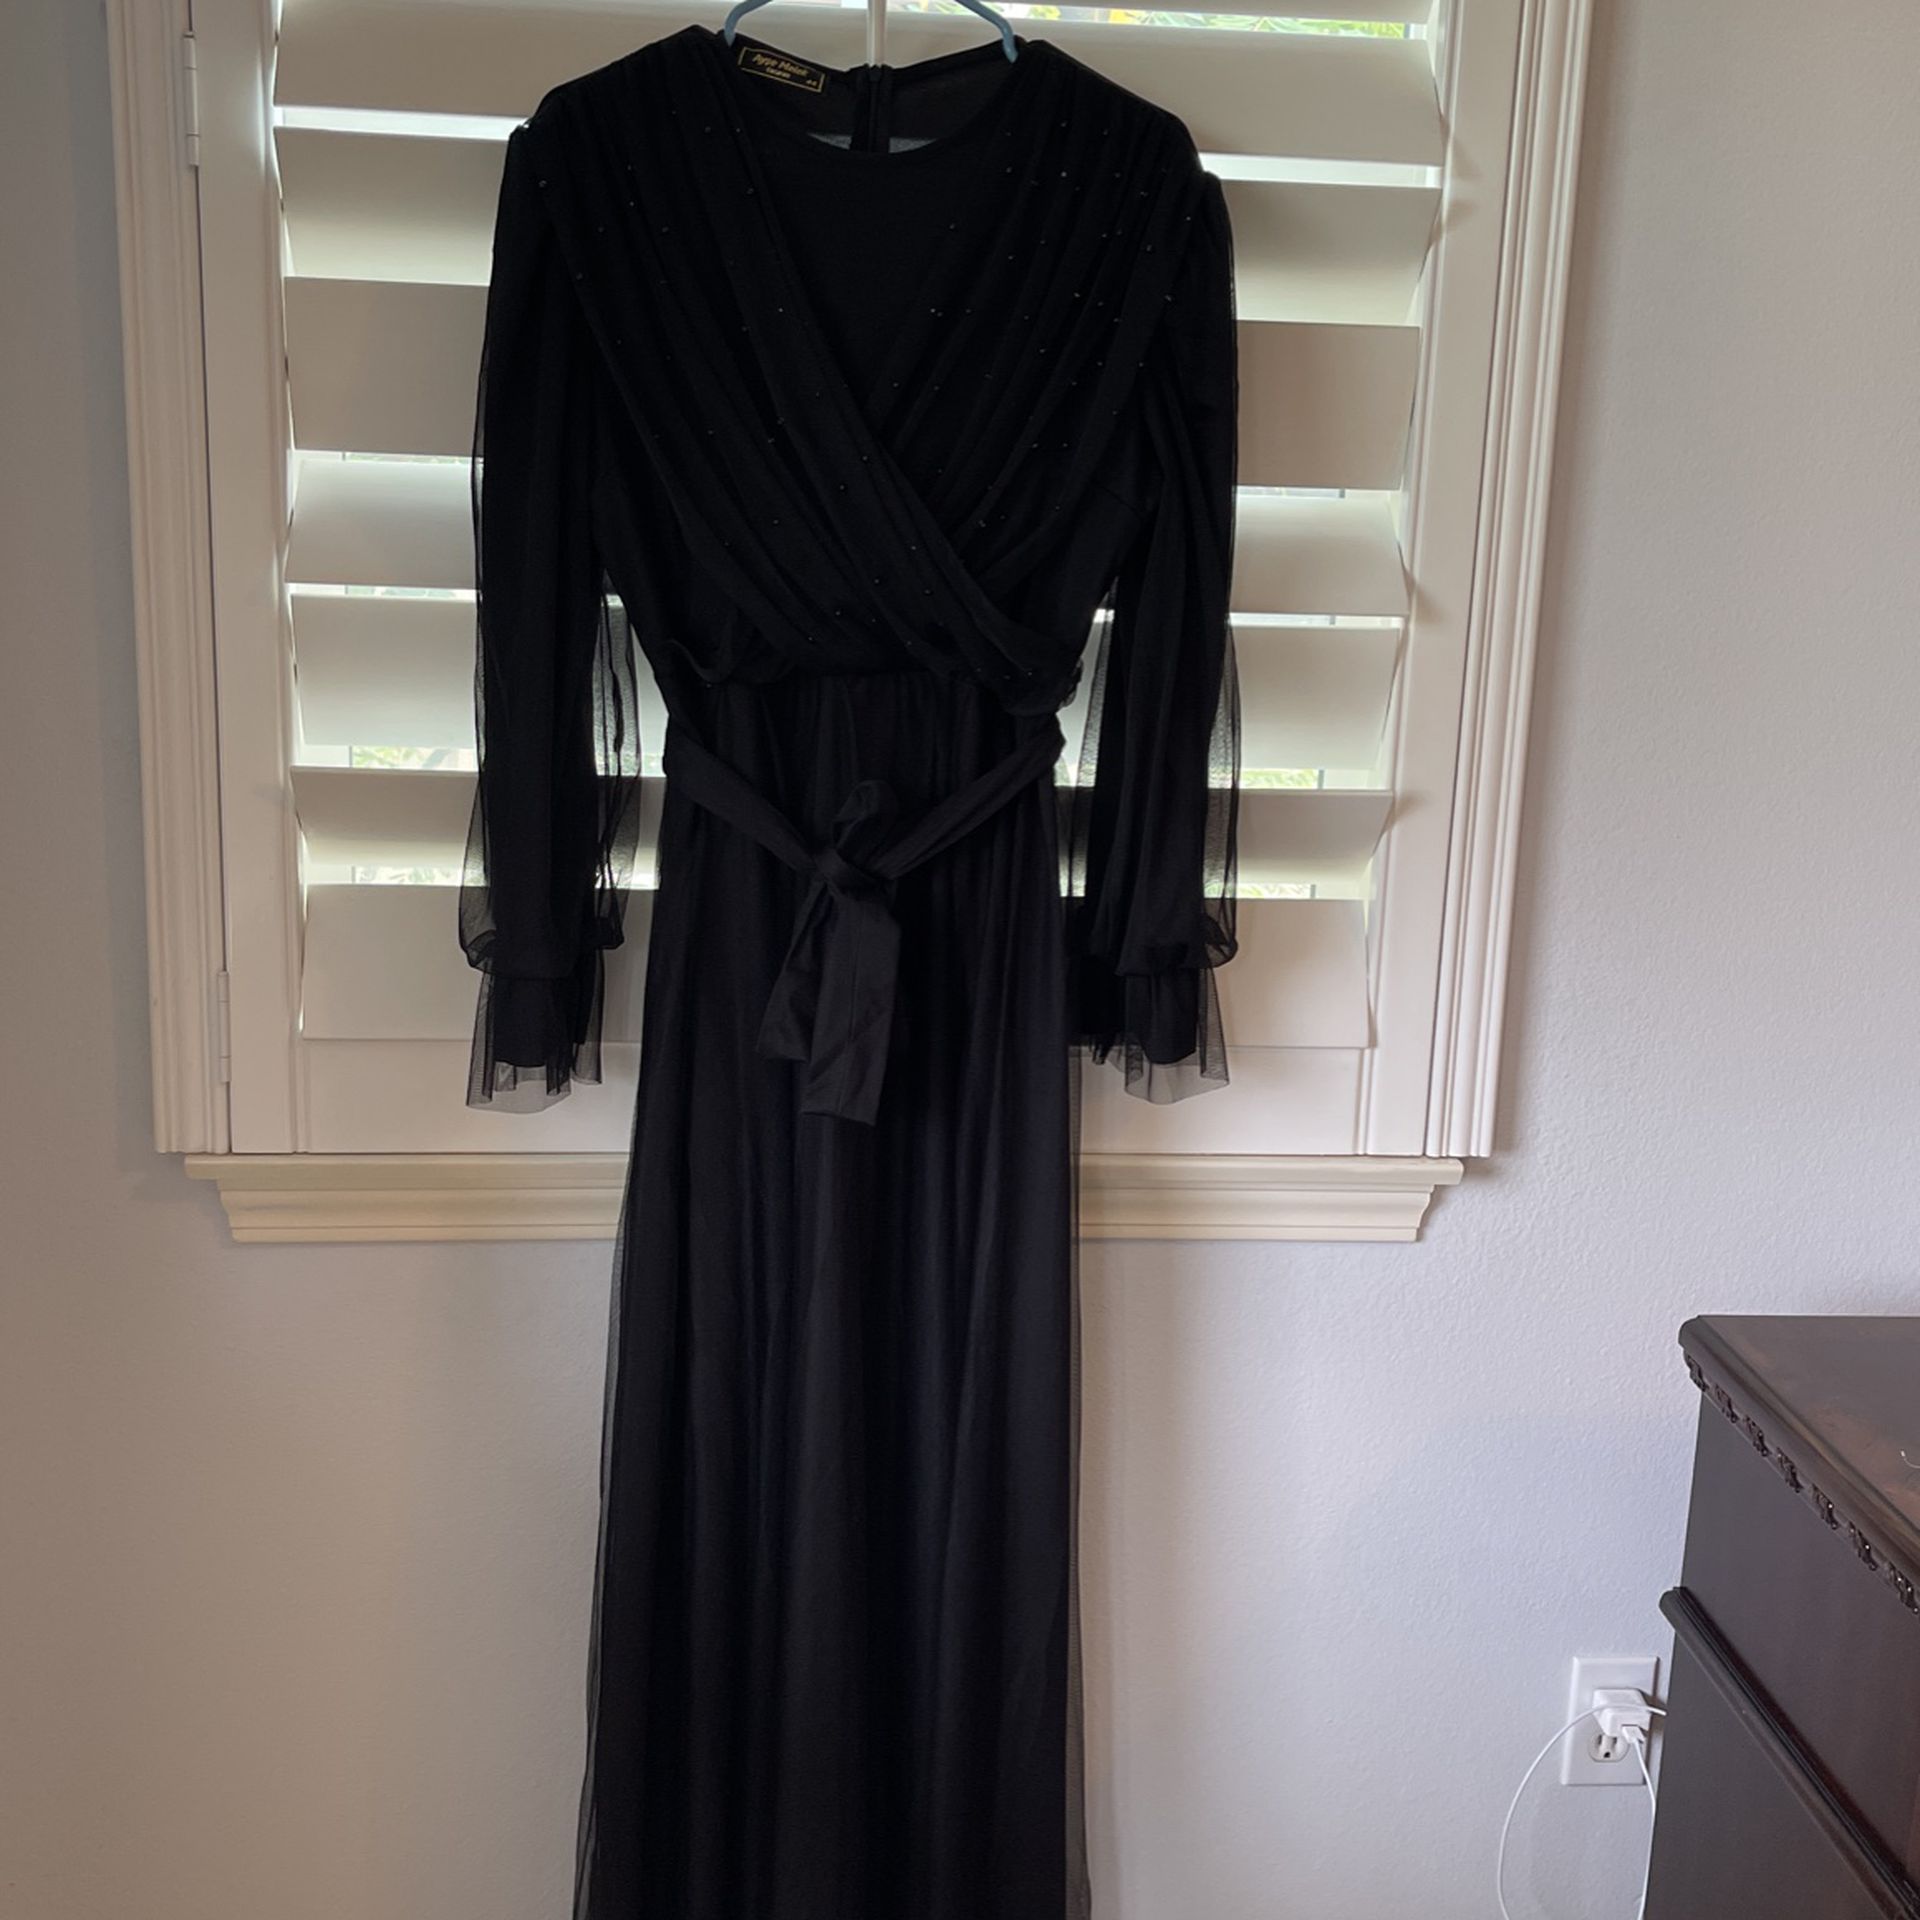 Black dress size 12 